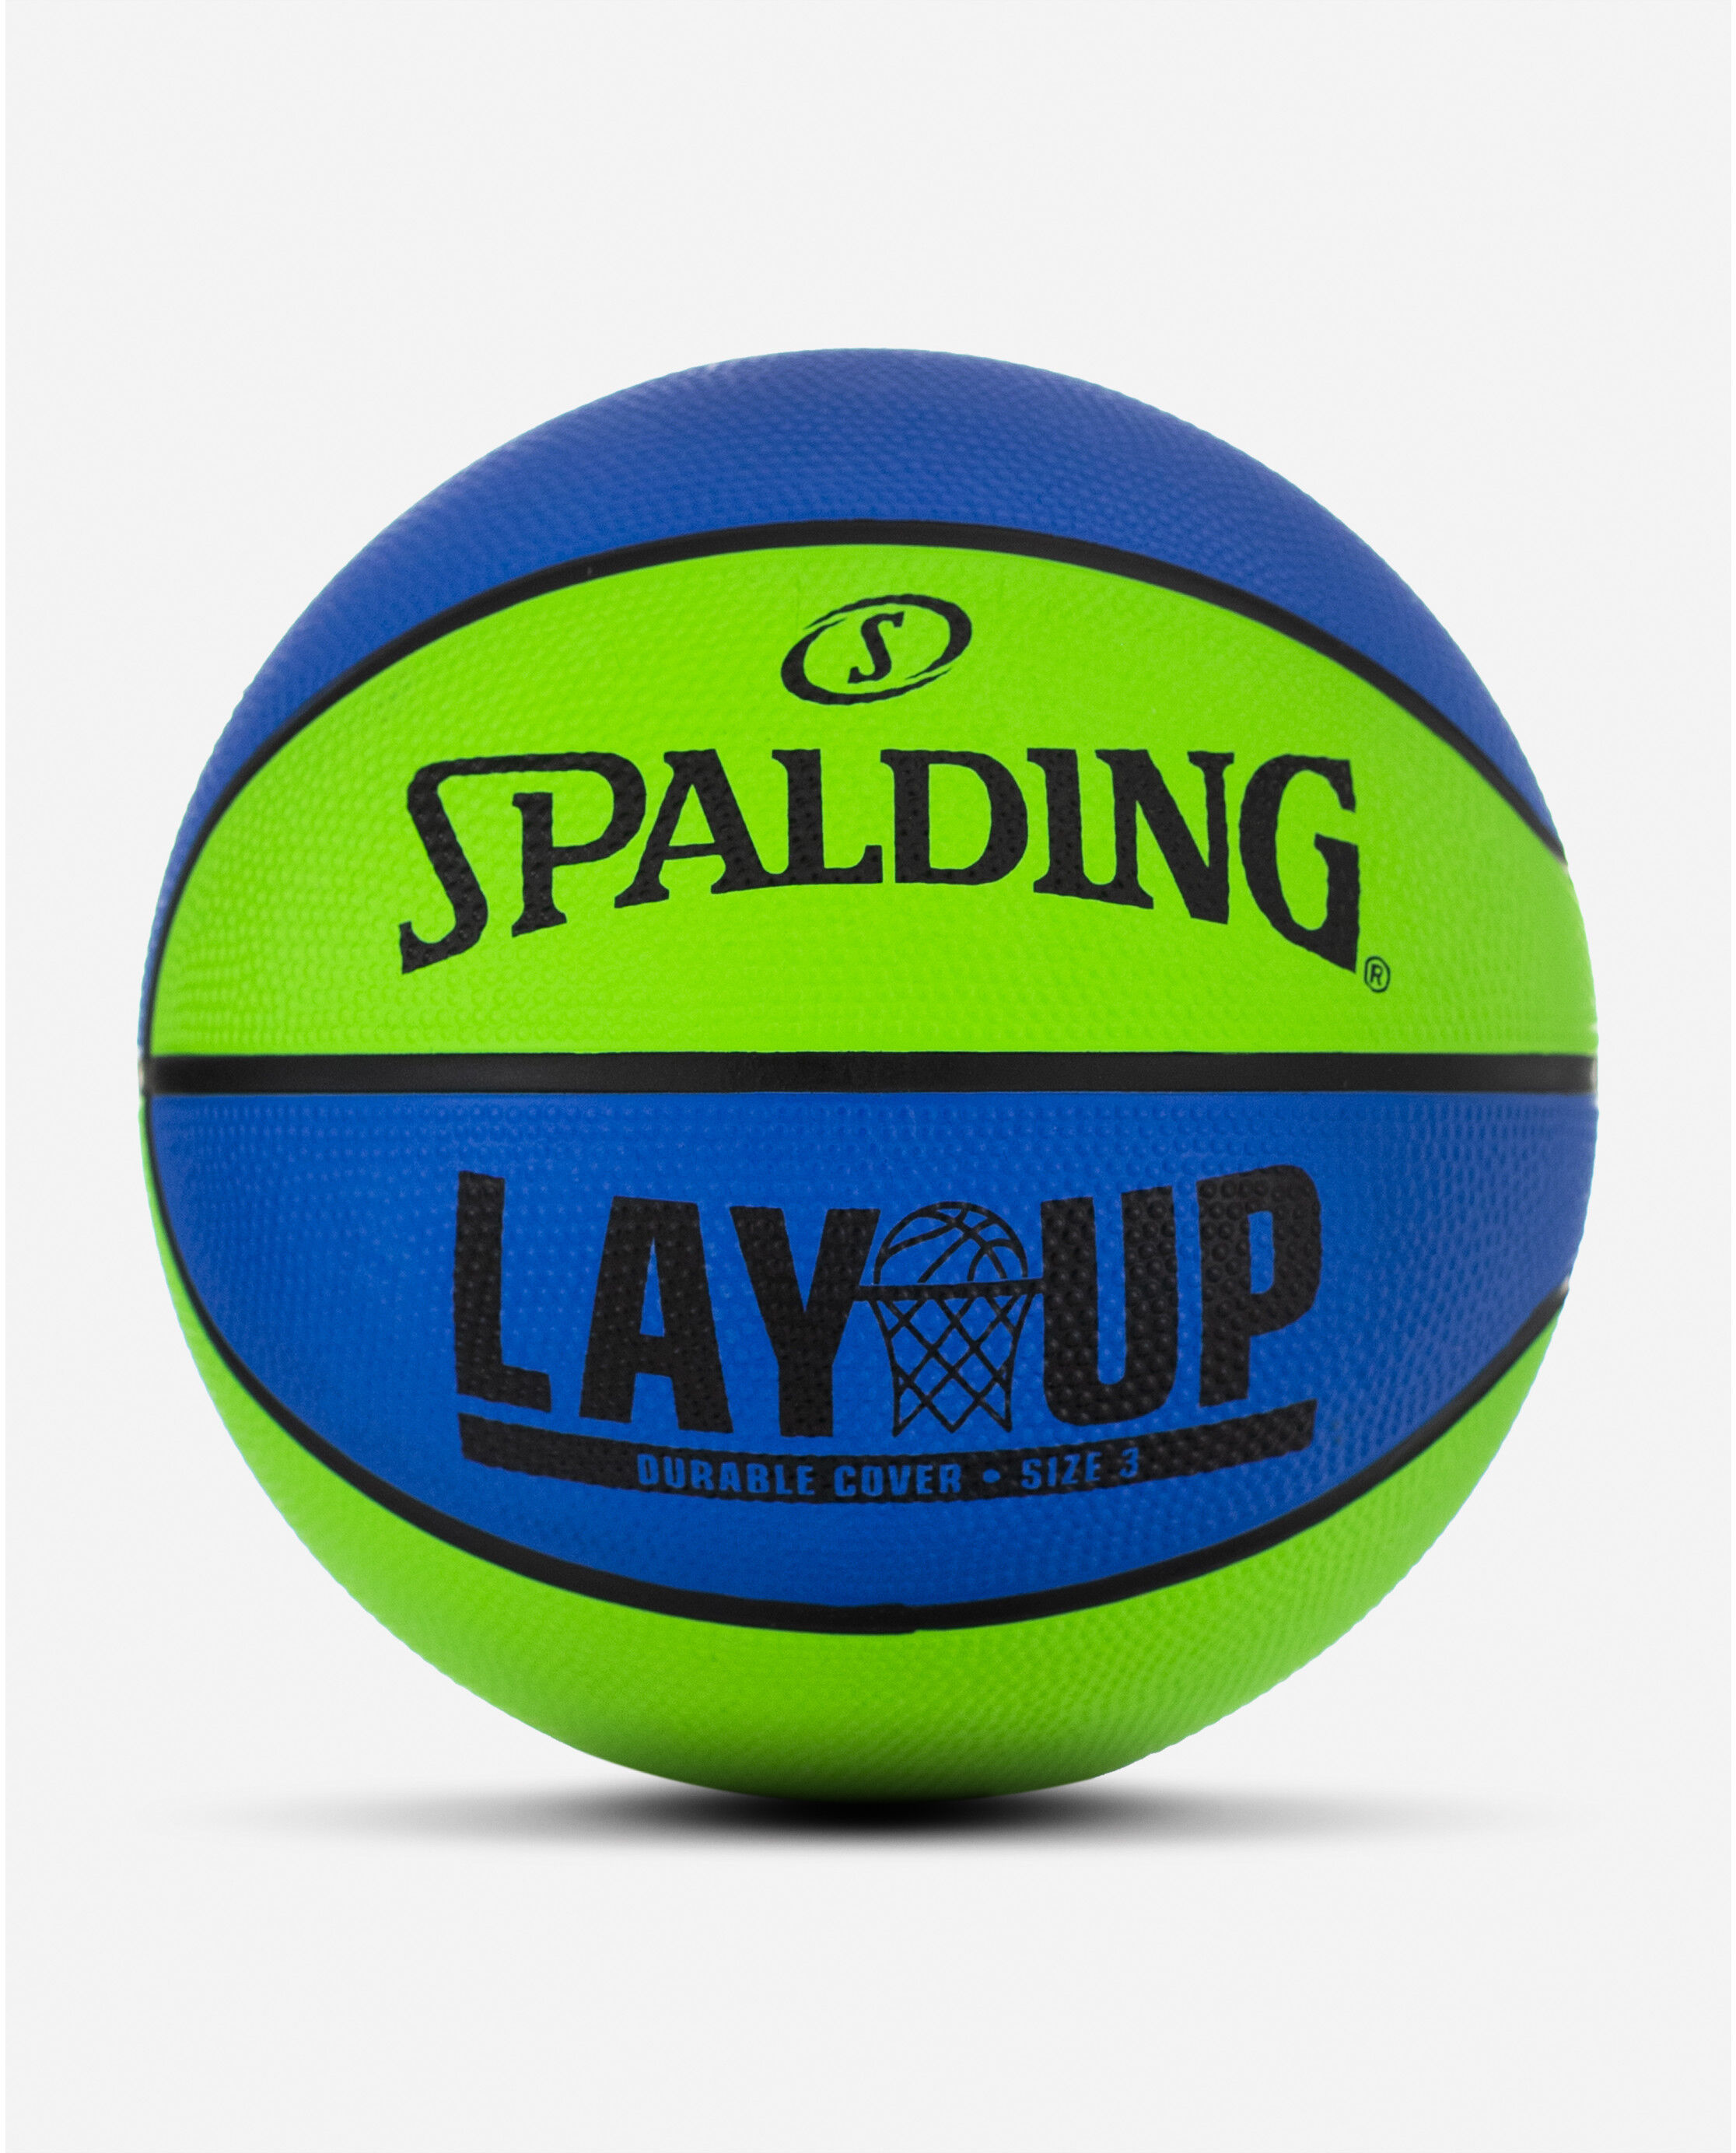 Spalding Layup Mini Basketball l Spalding.com